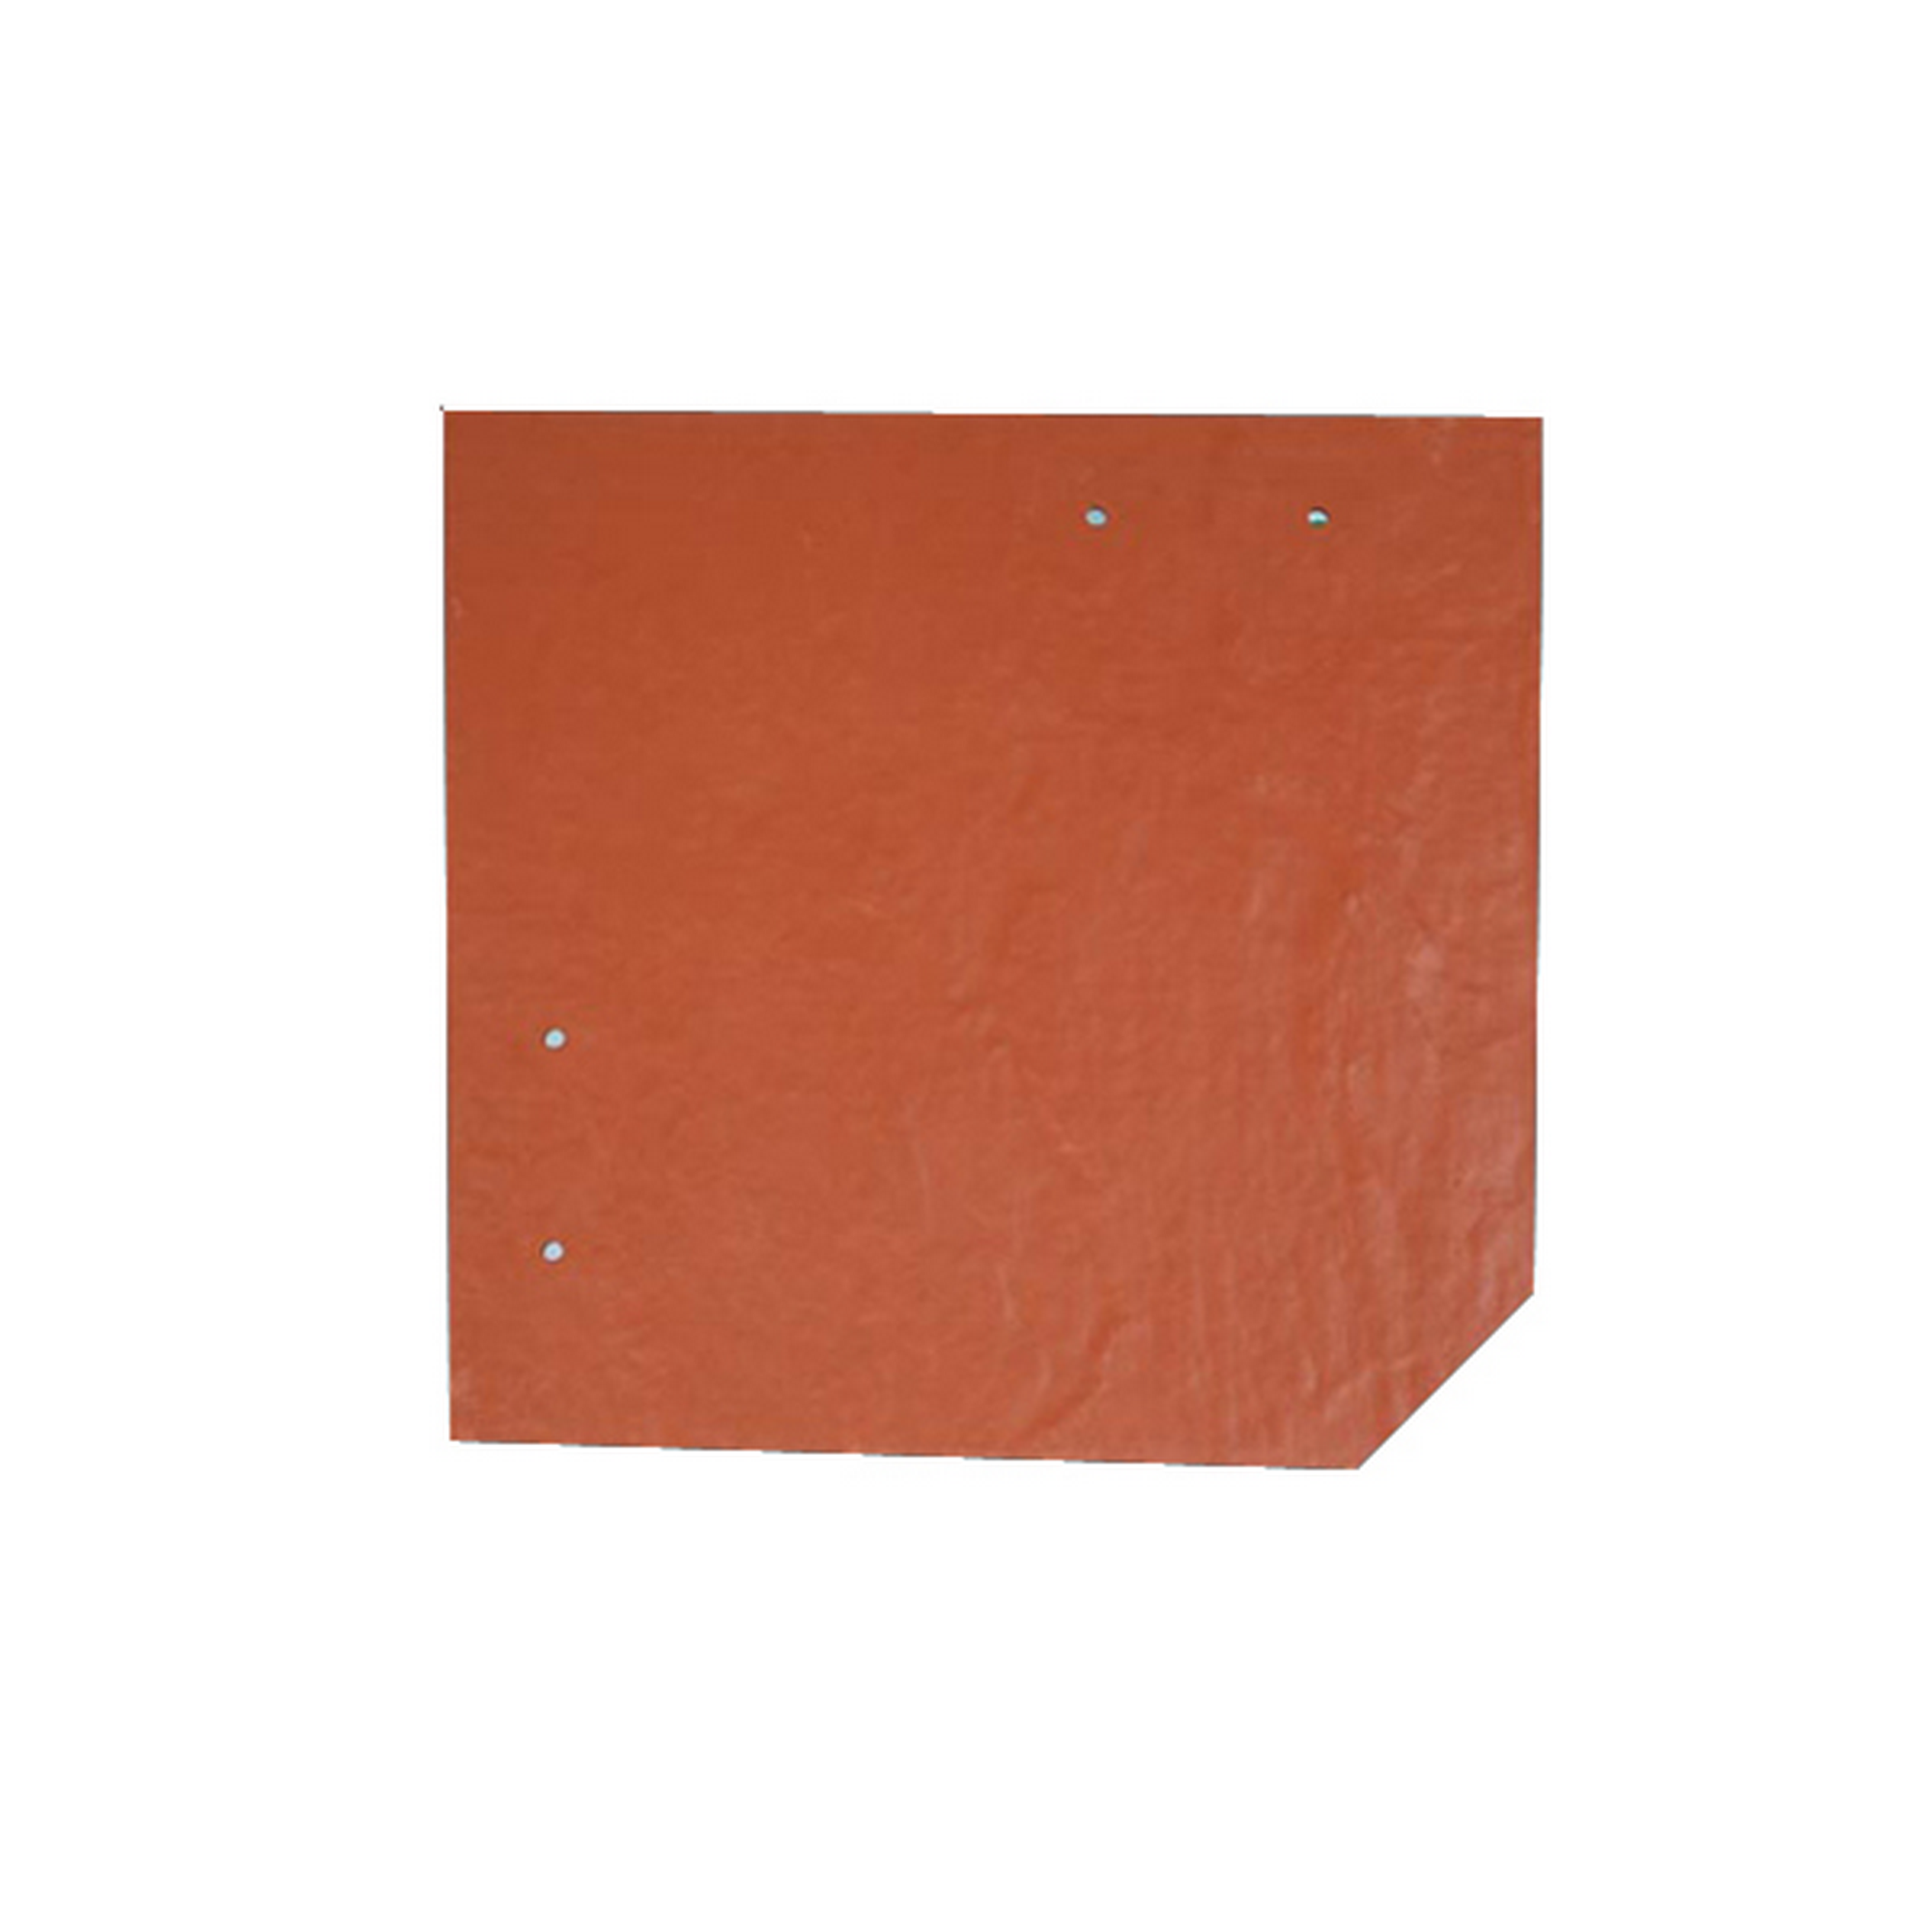 Carport 'Spreewald' rote Blende  585 x 893 cm imprägniert + product picture